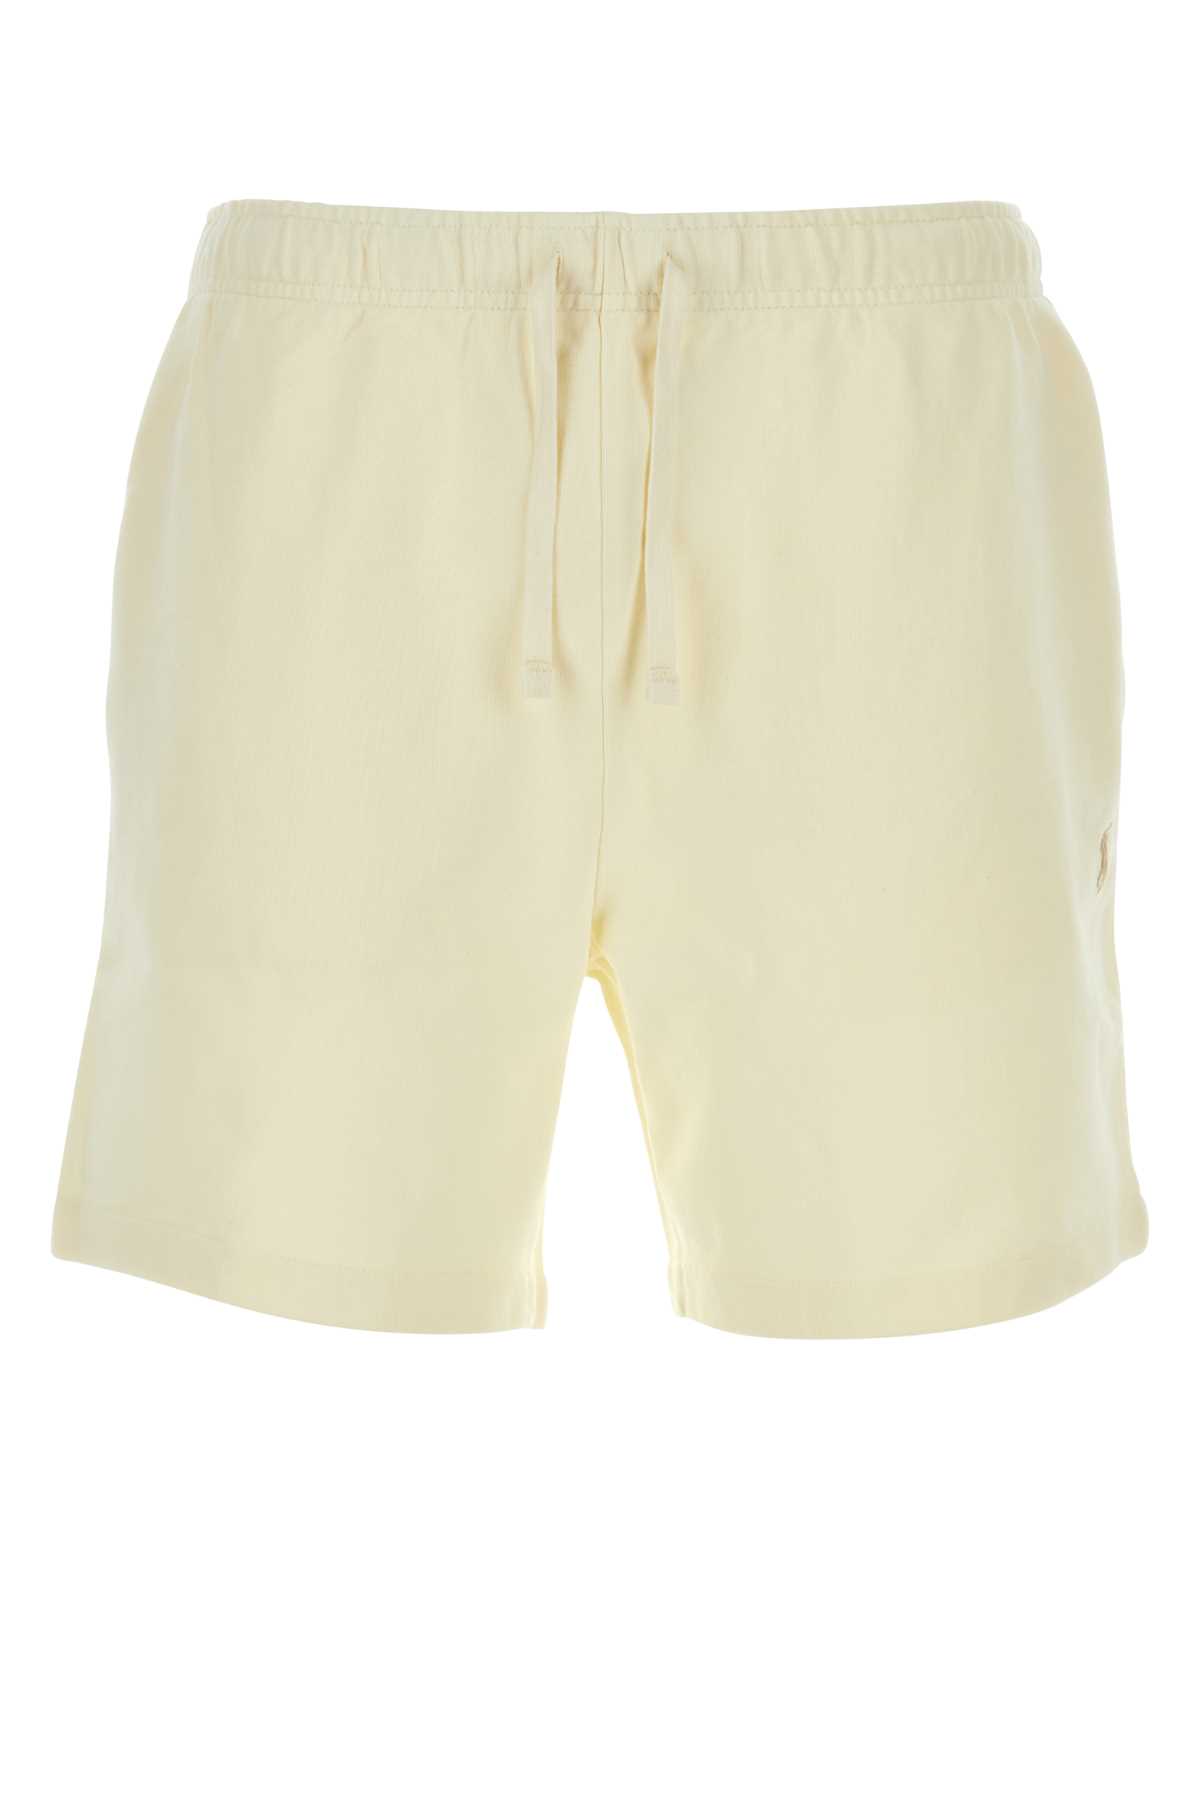 Ivory Cotton Bermuda Shorts